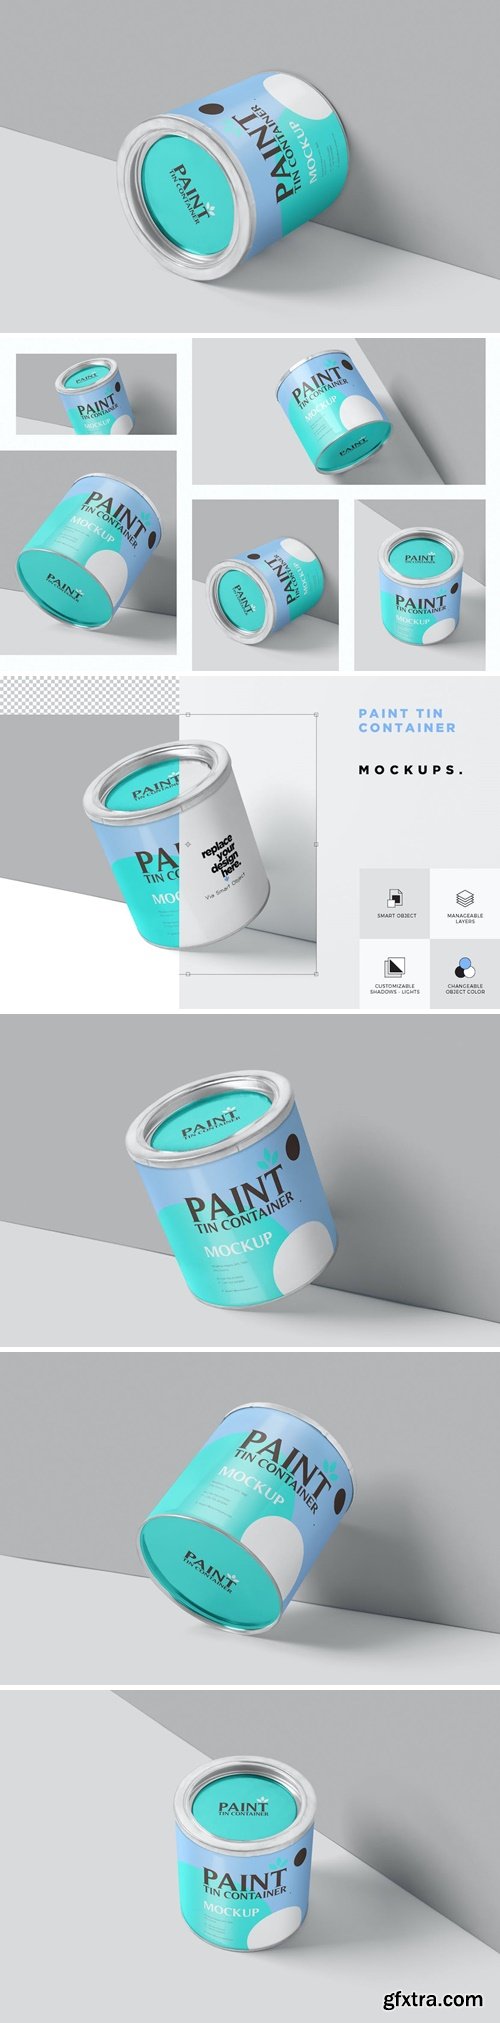 Paint Tin Container Mockups 3FUU64C